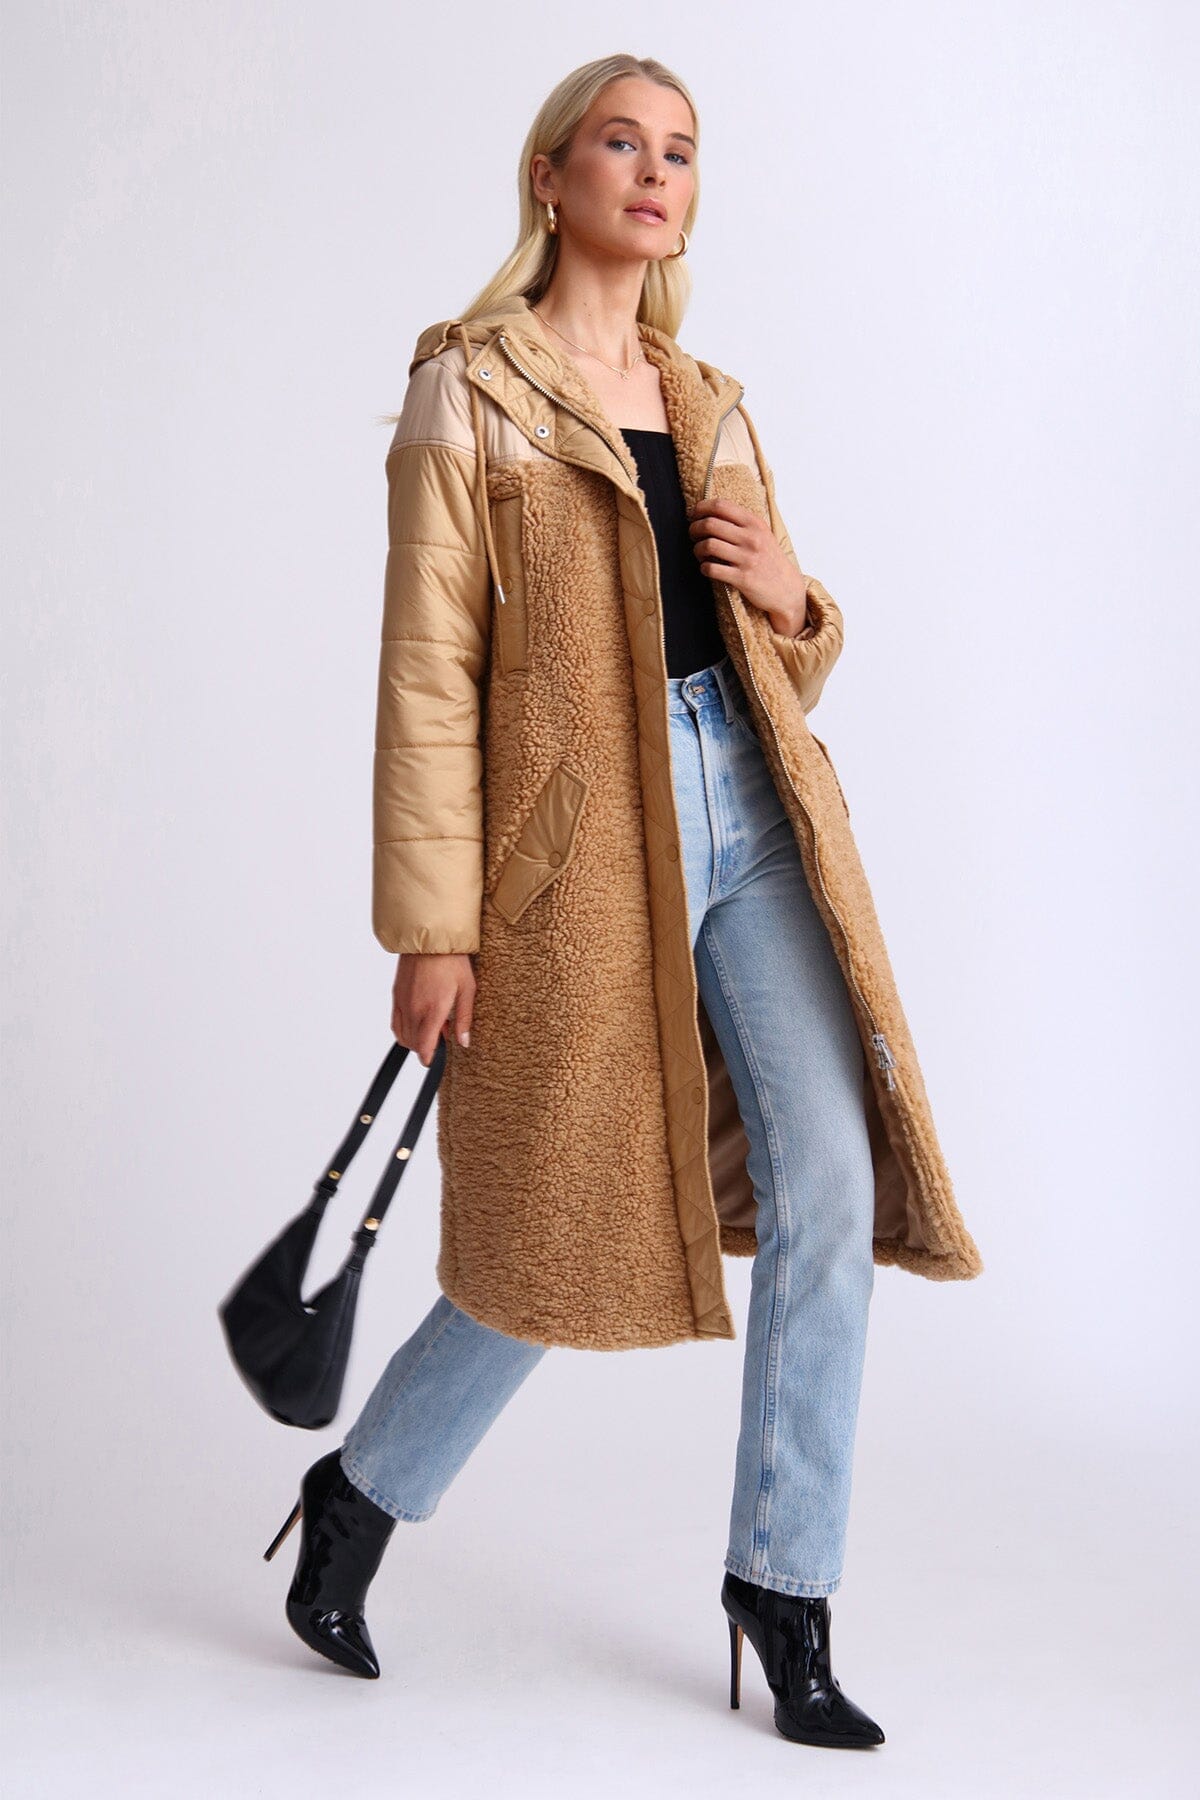 Camel tan mixed media faux shearling fur anorak long coat jacket - figure flattering casual street style coats jackets for women